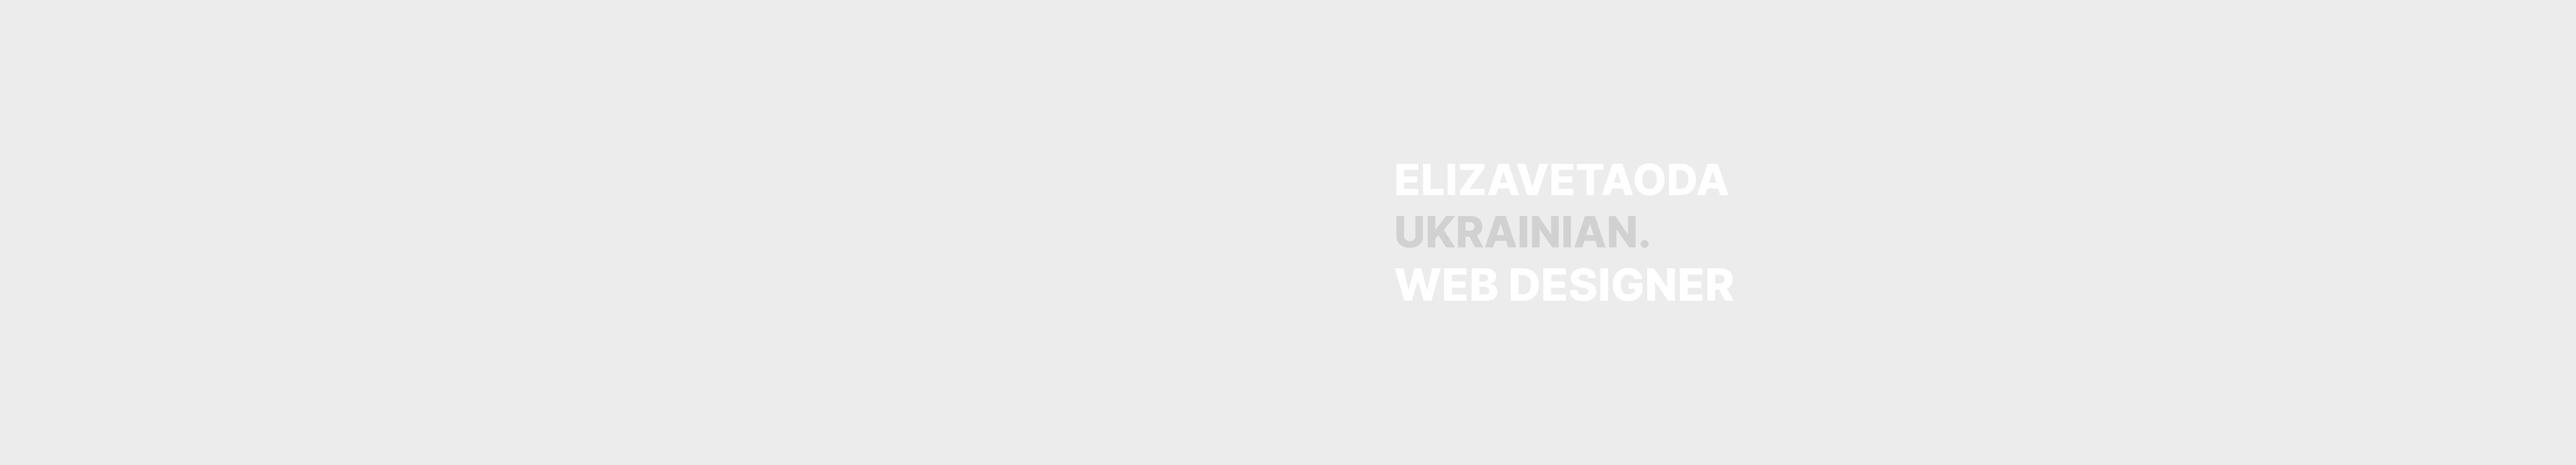 Elizaveta Oda's profile banner